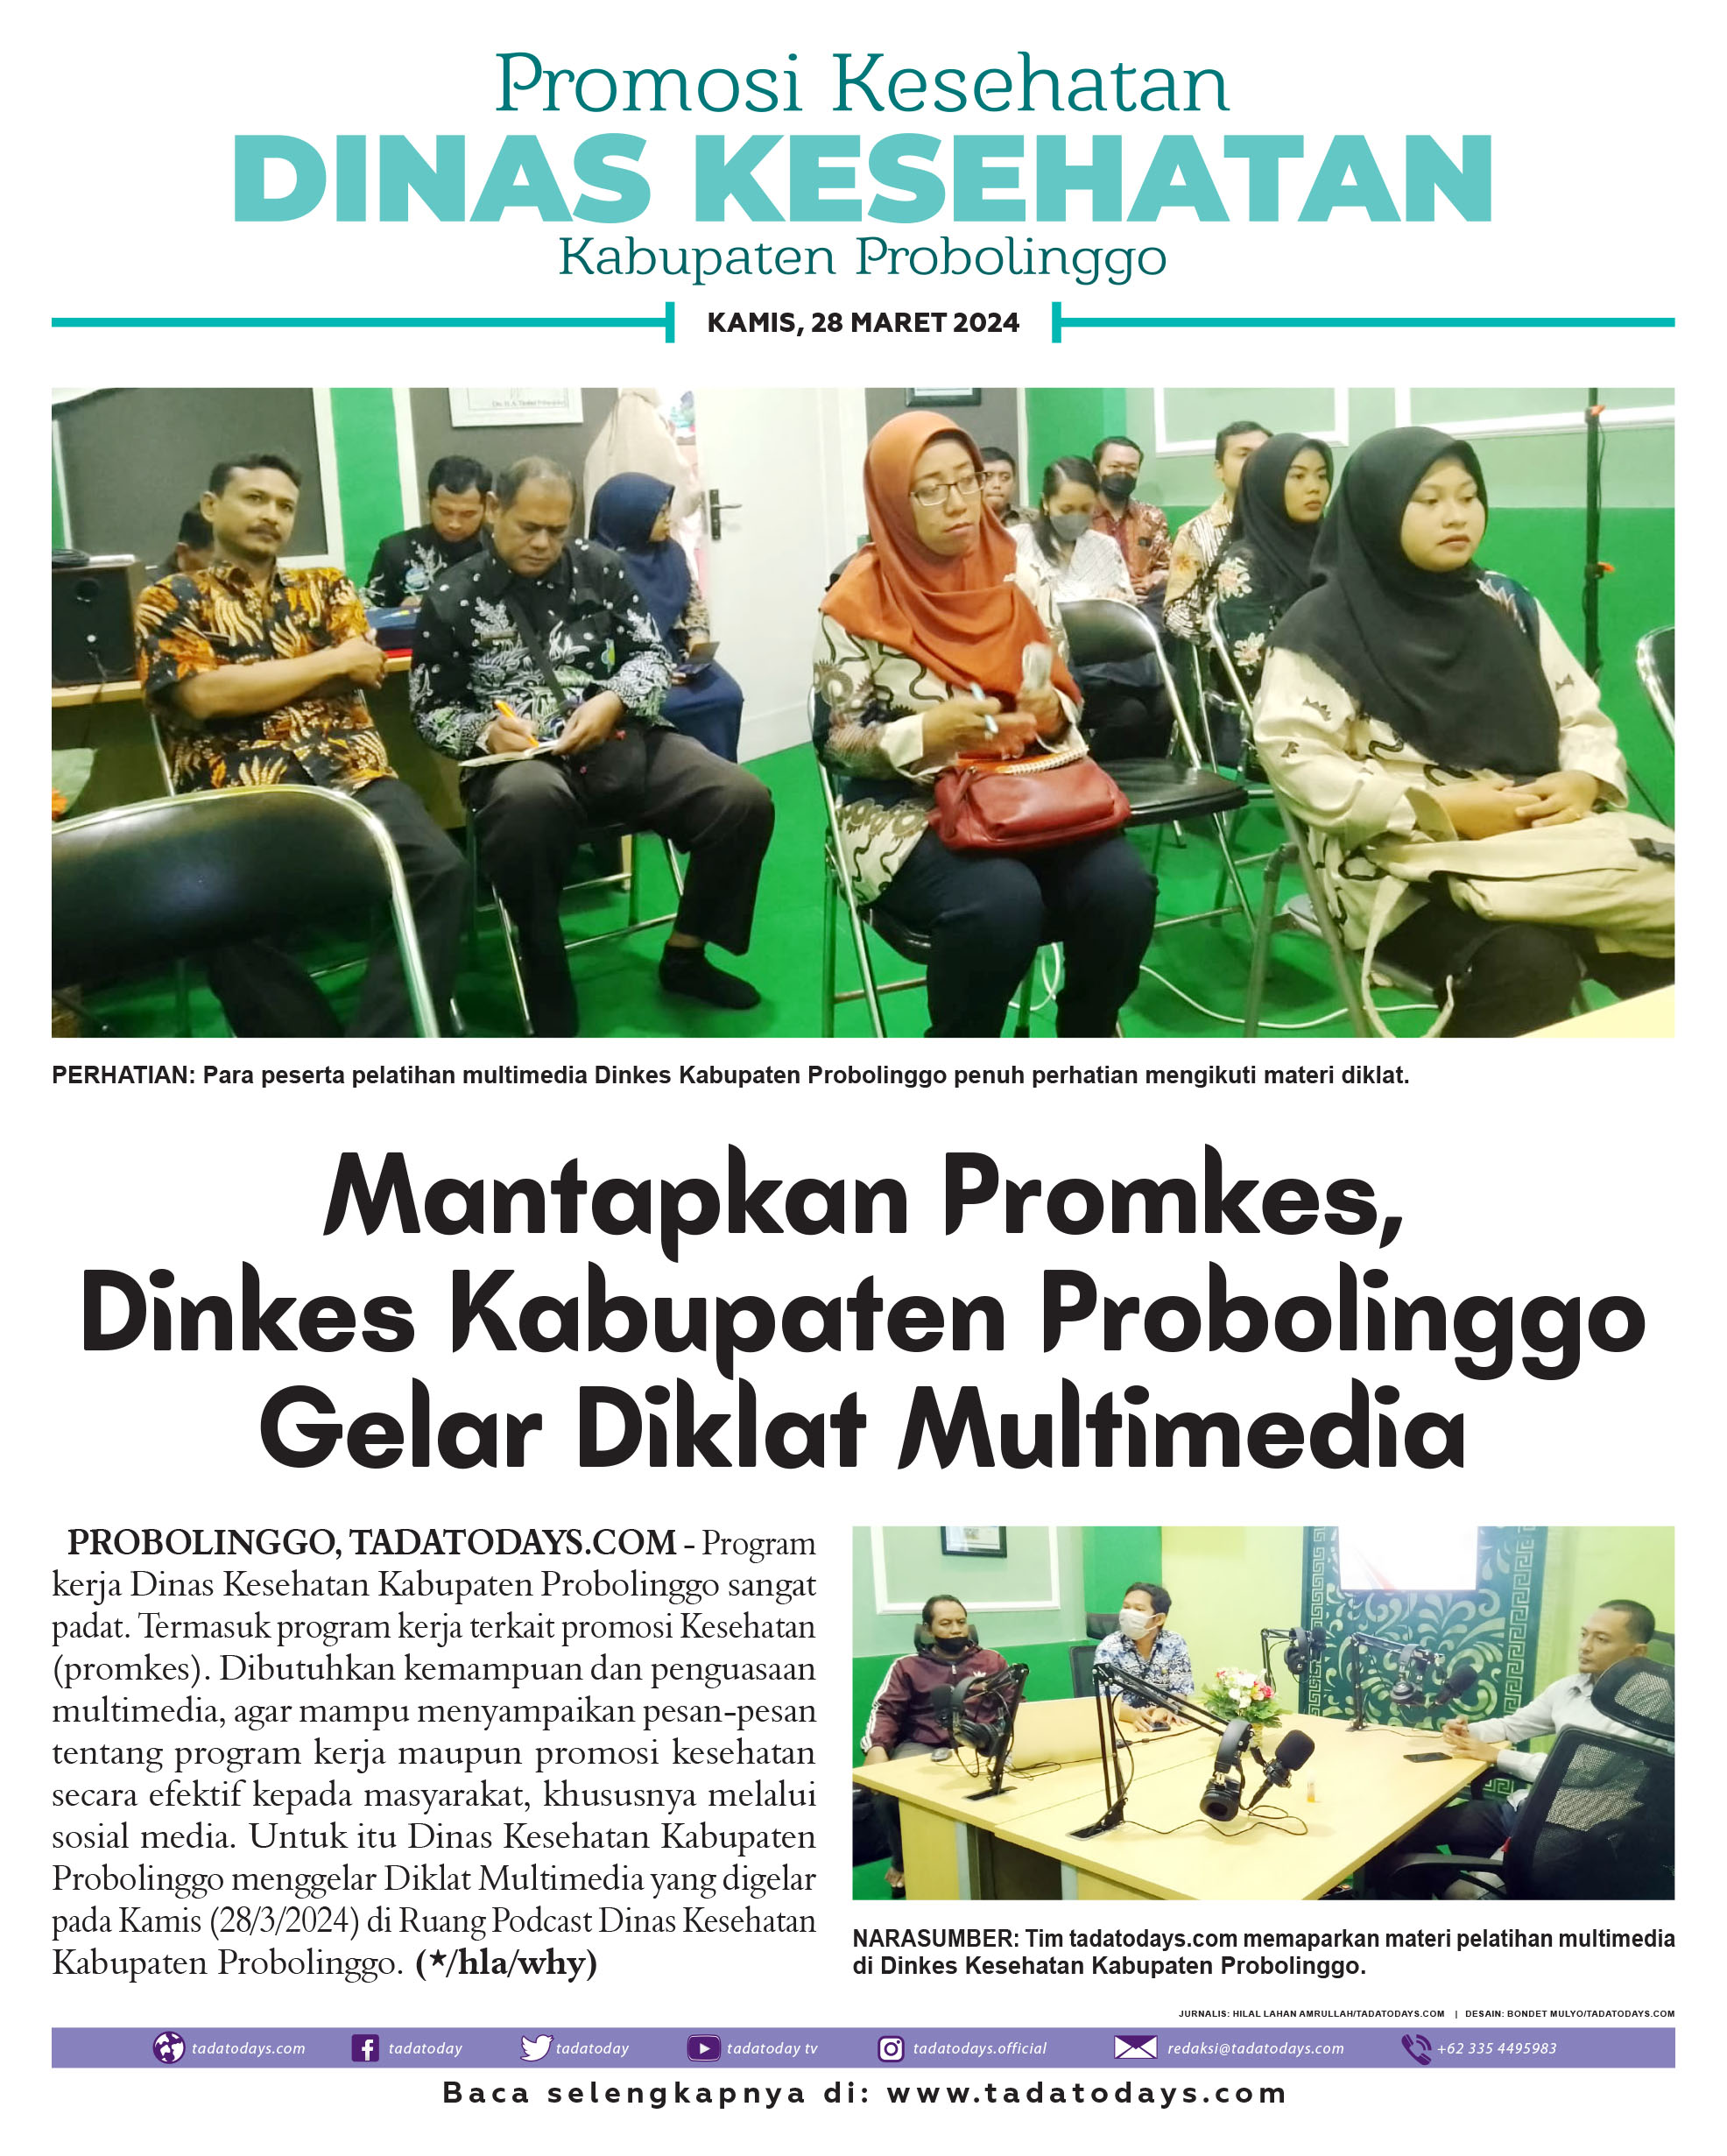 Mantapkan Promkes, Dinkes Kabupaten Probolinggo Menggelar Diklat Multimedia